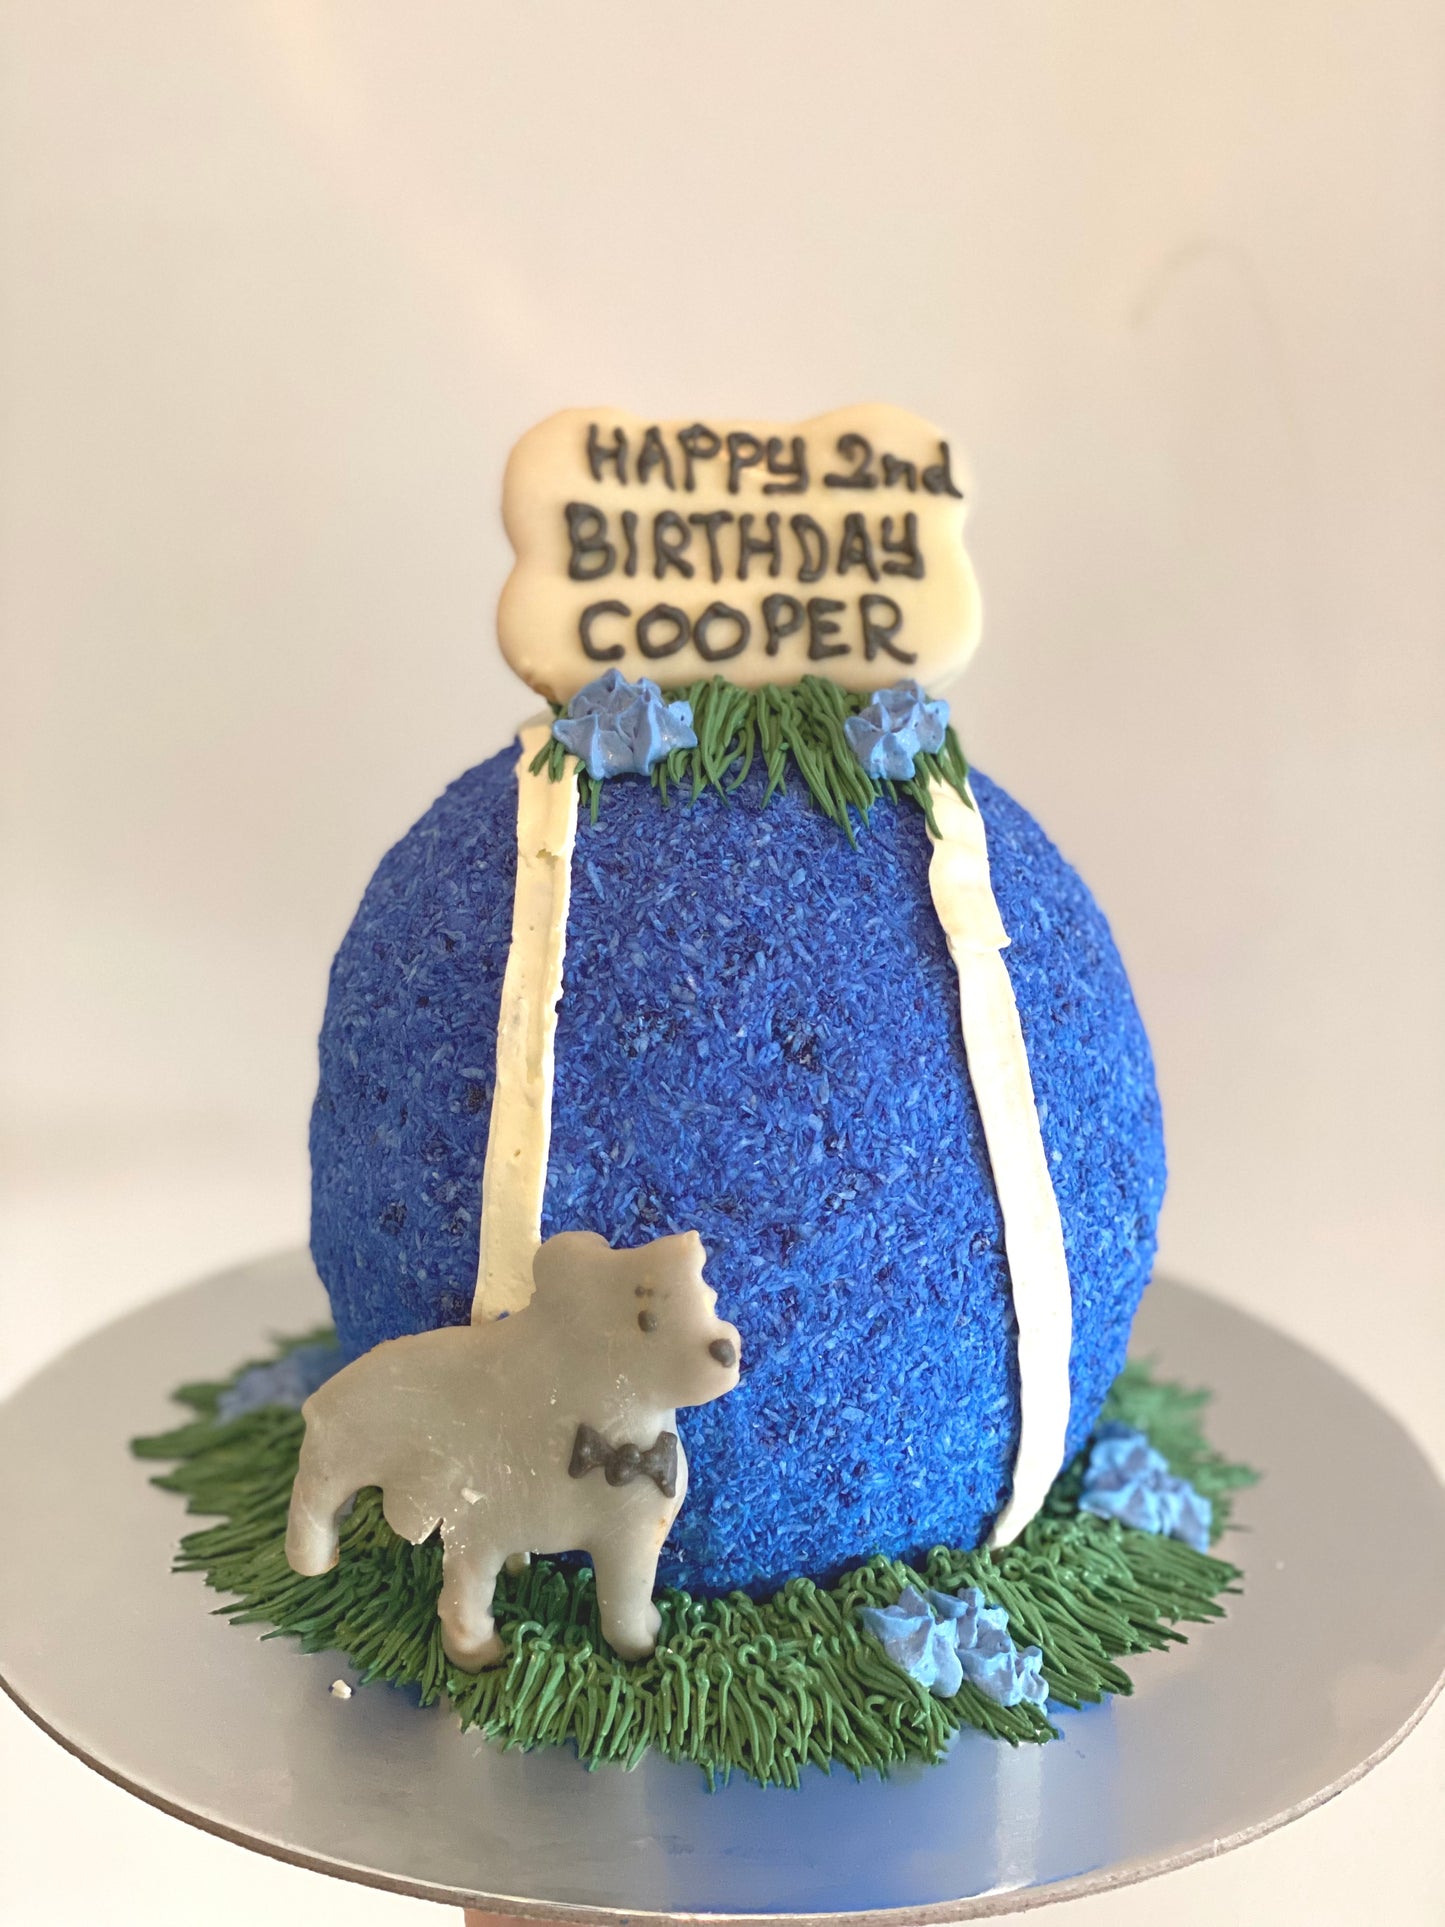 Tennisball Dog Cake 5“ & 6“